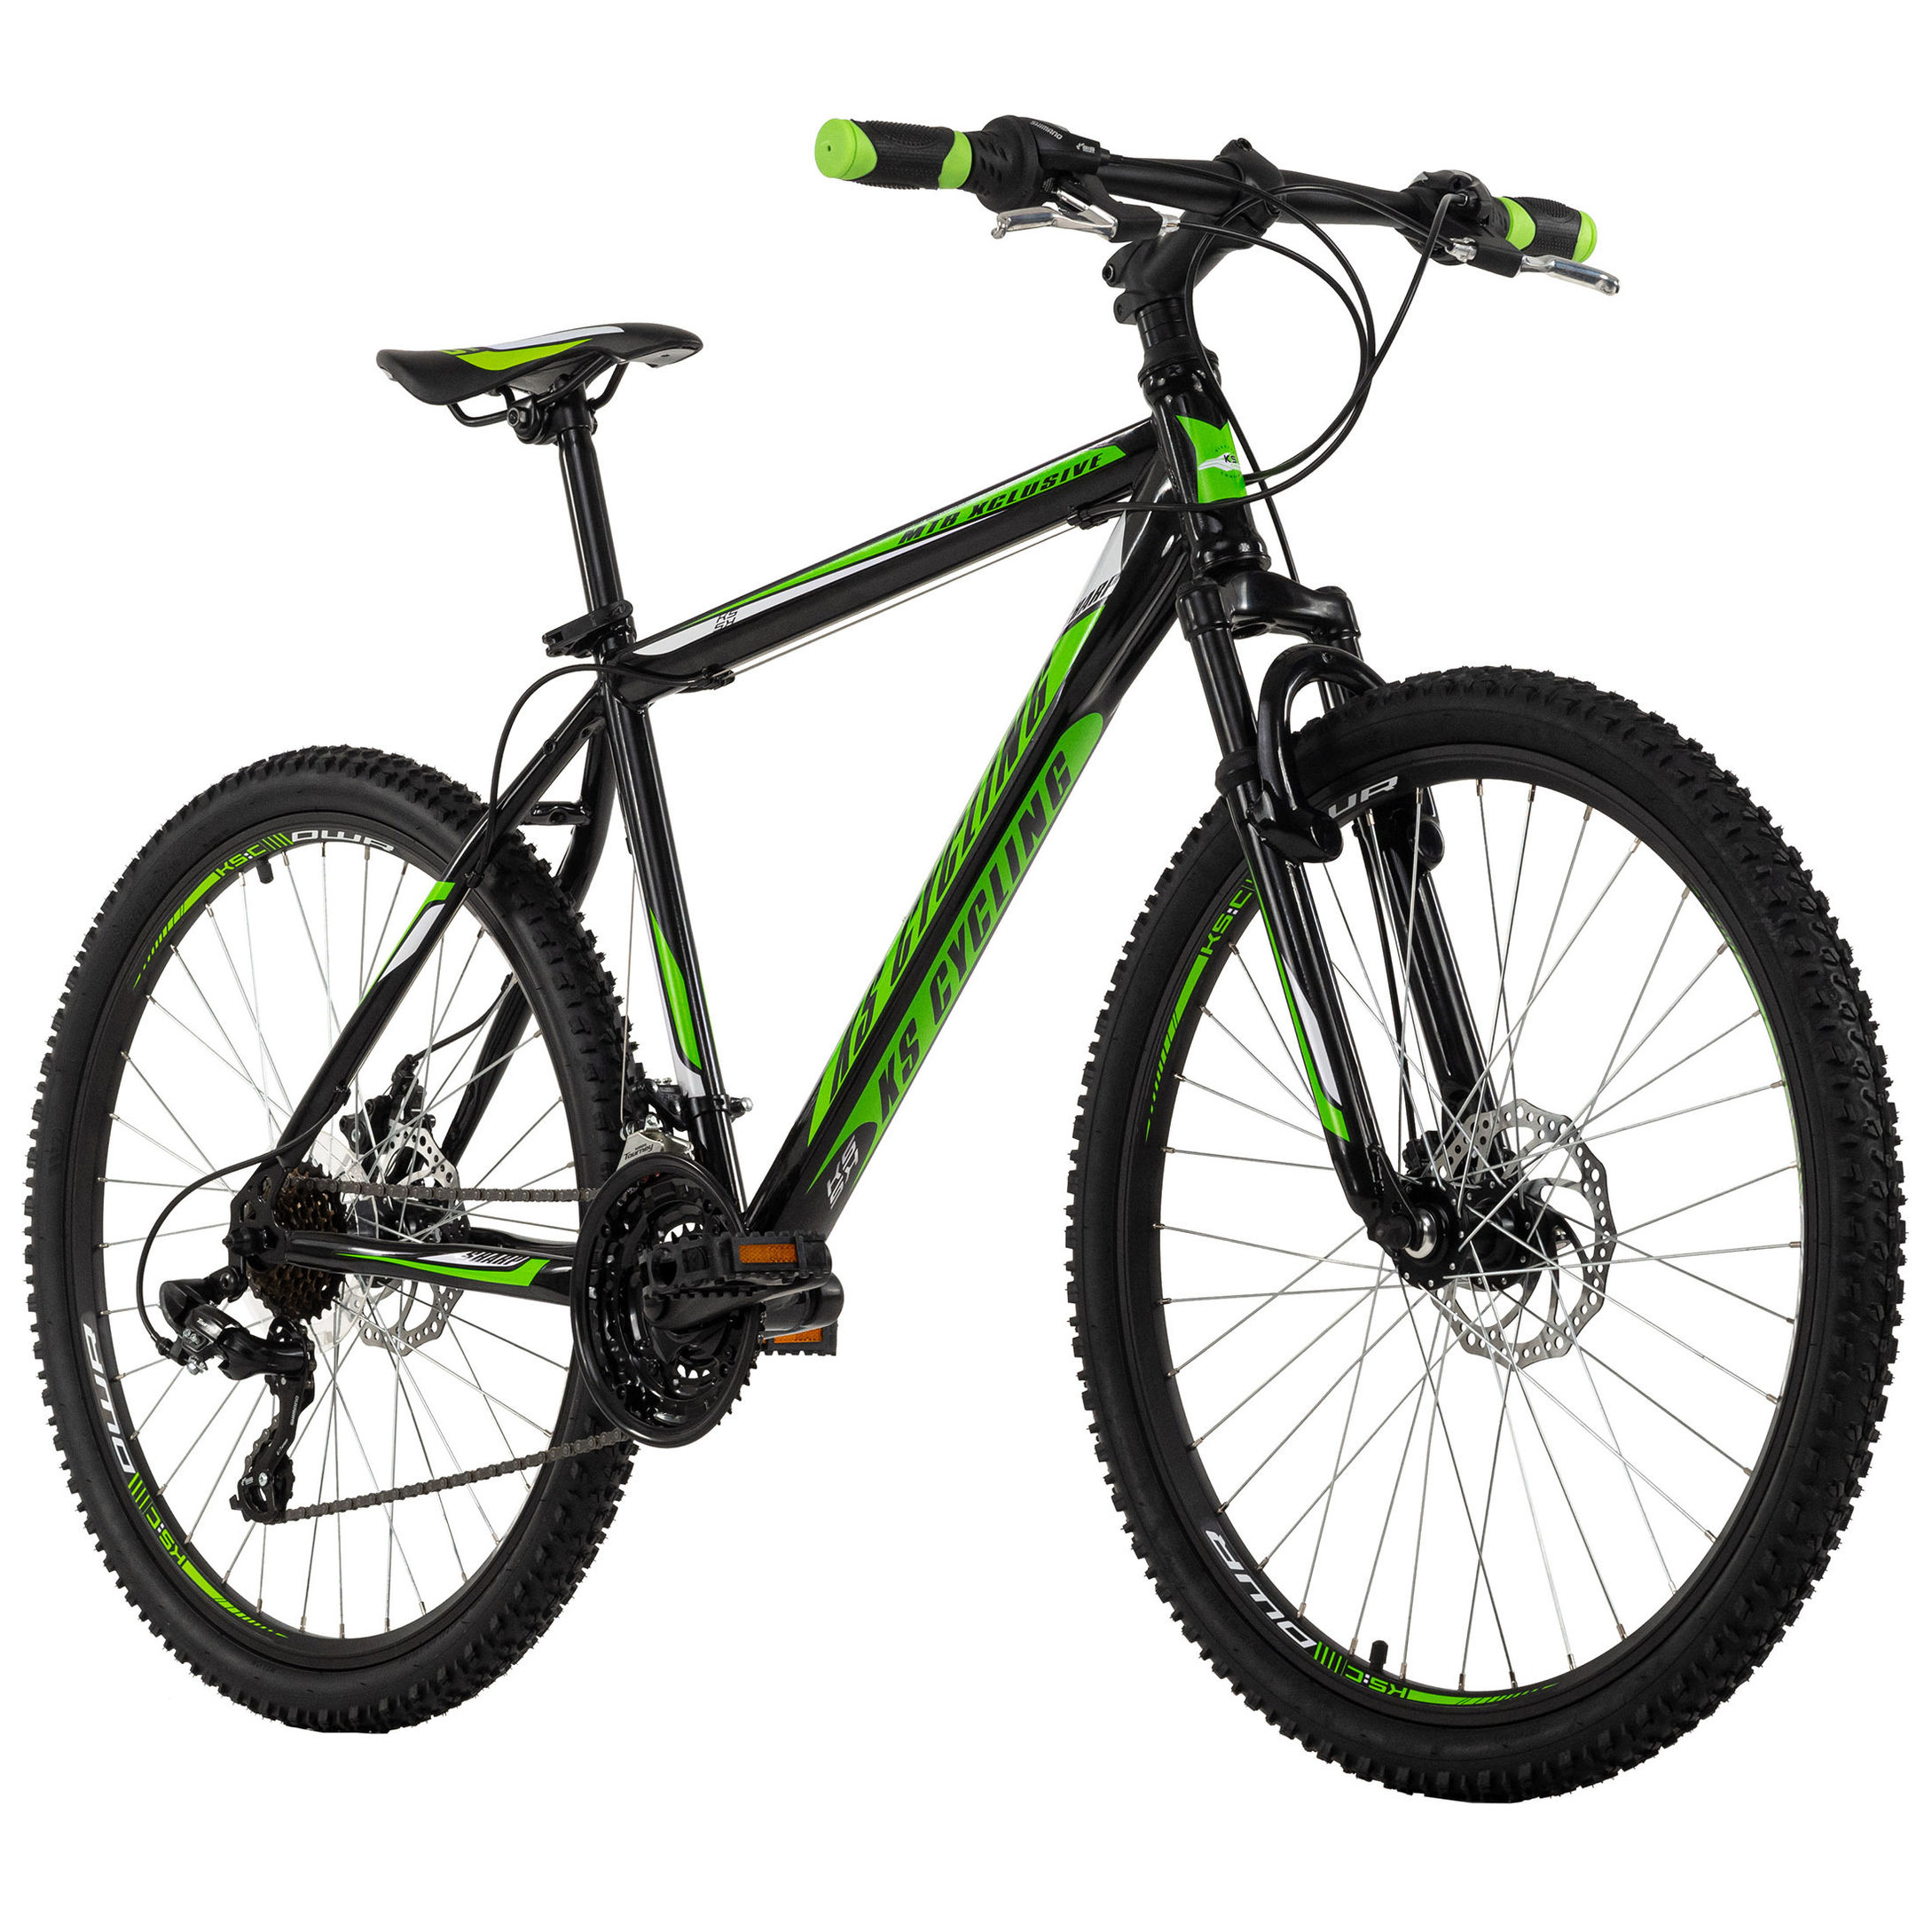 KS Cycling Mountainbike Hardtail 26 Zoll Sharp schwarz-grün schwarz-grün  Größe: 46 cm | Weltbild.de